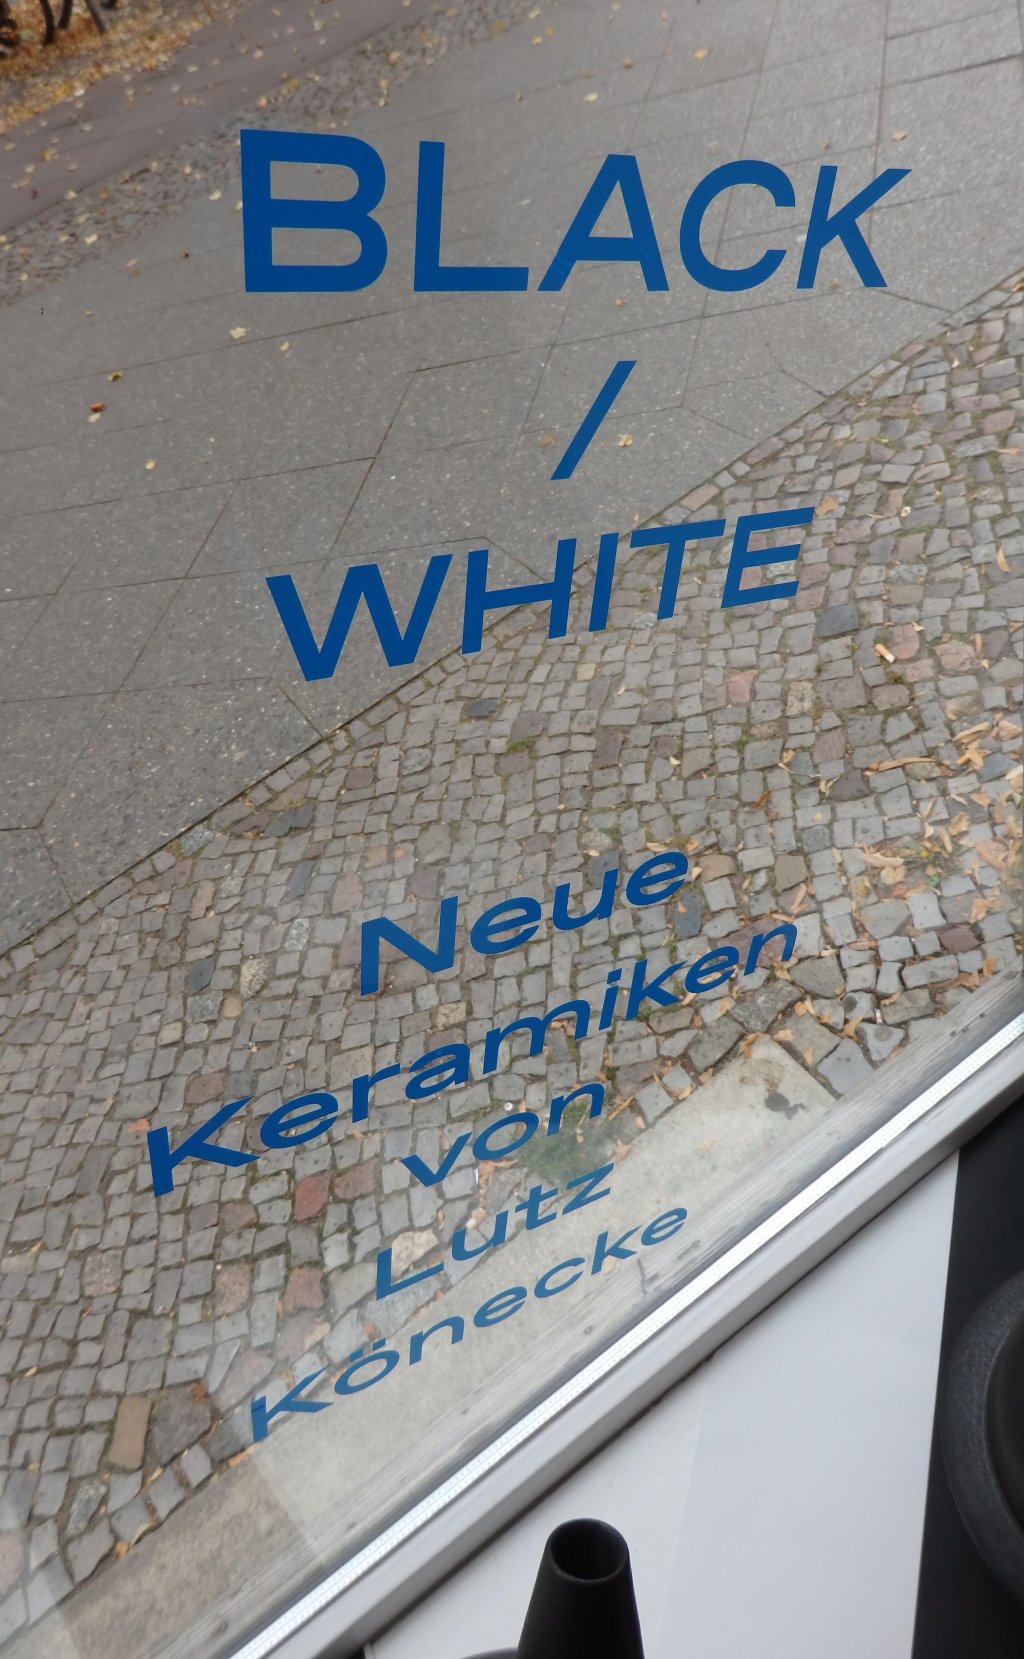 exhibition Black / White new ceramics by Lutz Könecke until November 2021 in Berlin